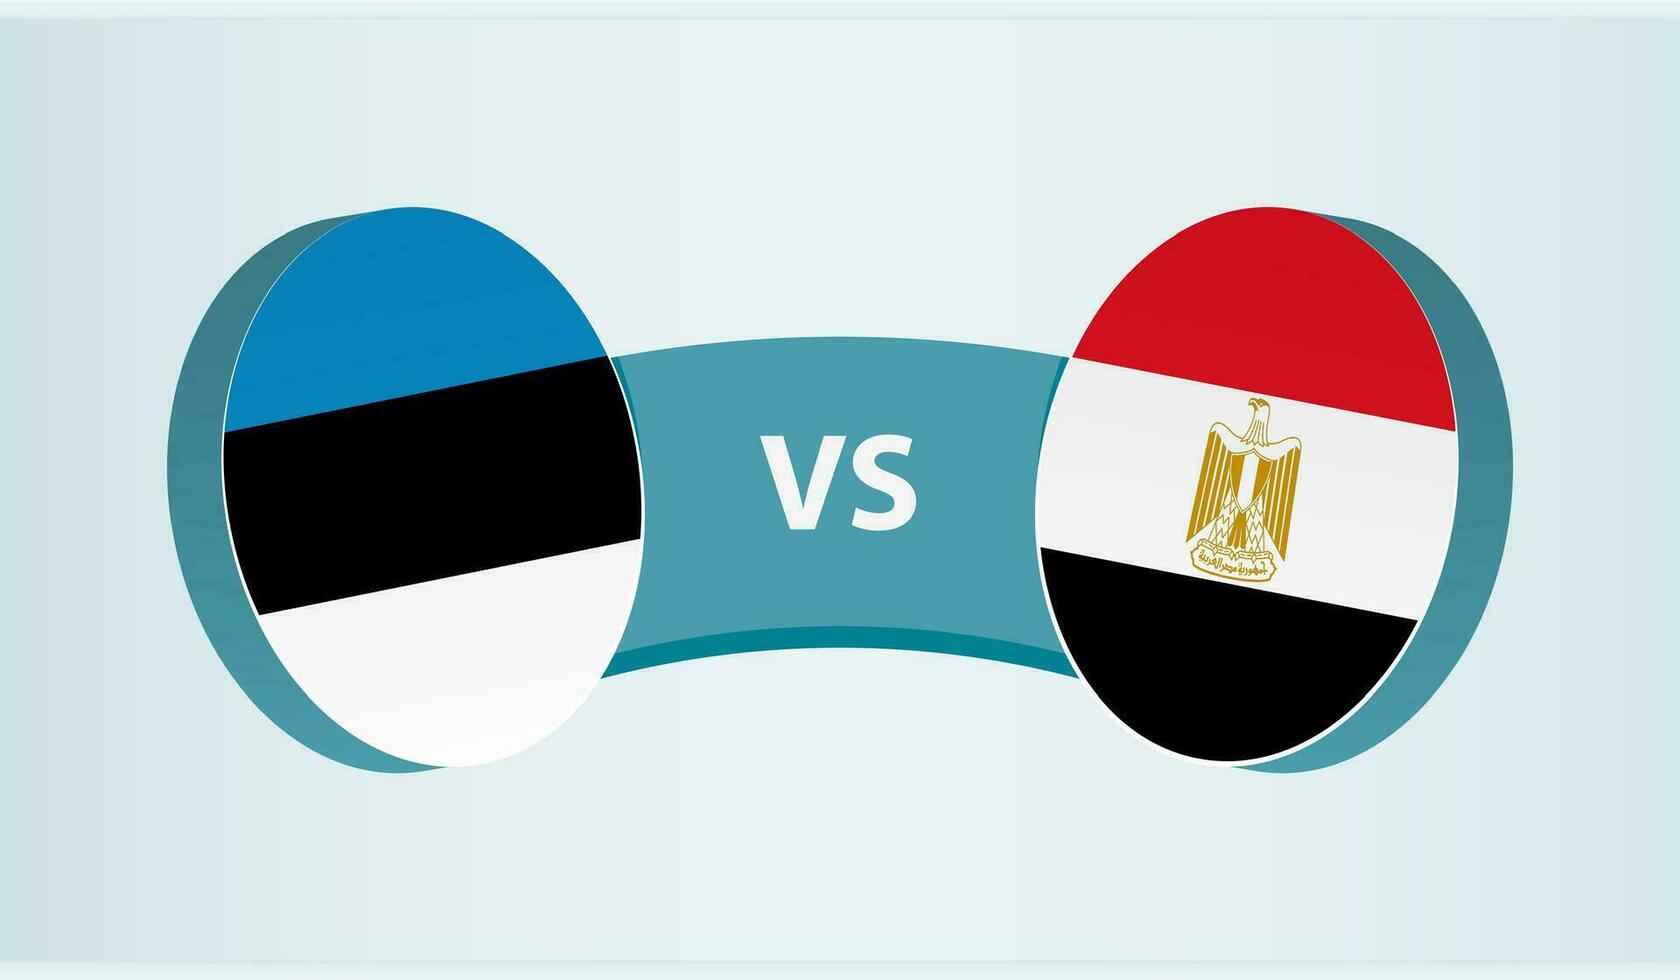 Estonia versus Egypt, team sports competition concept. vector